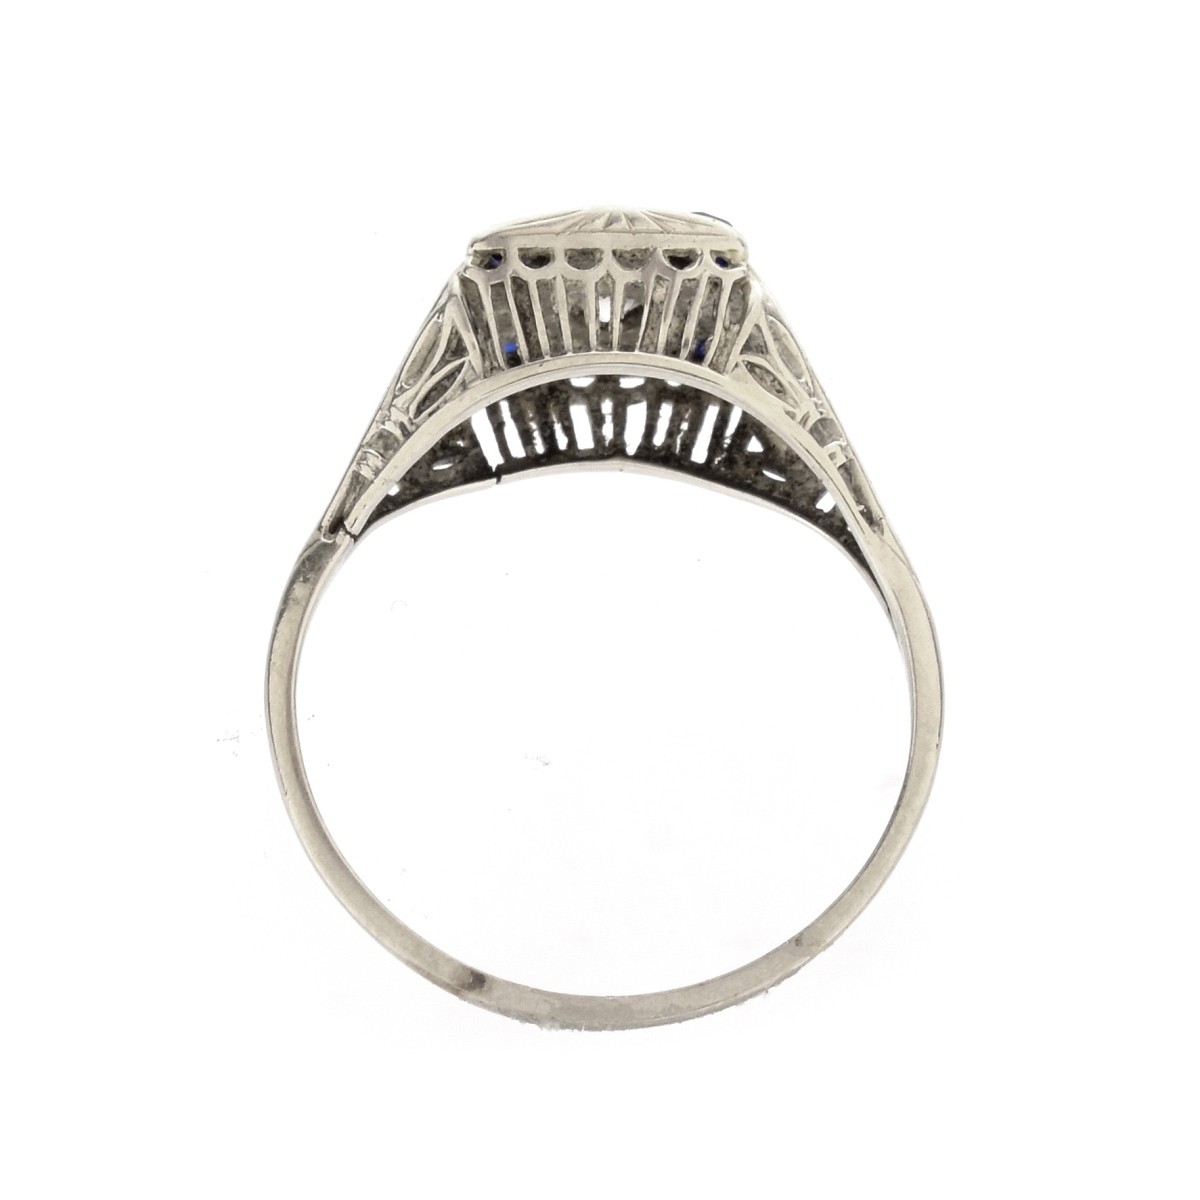 Art Deco Diamond Sapphire and 14K Ring